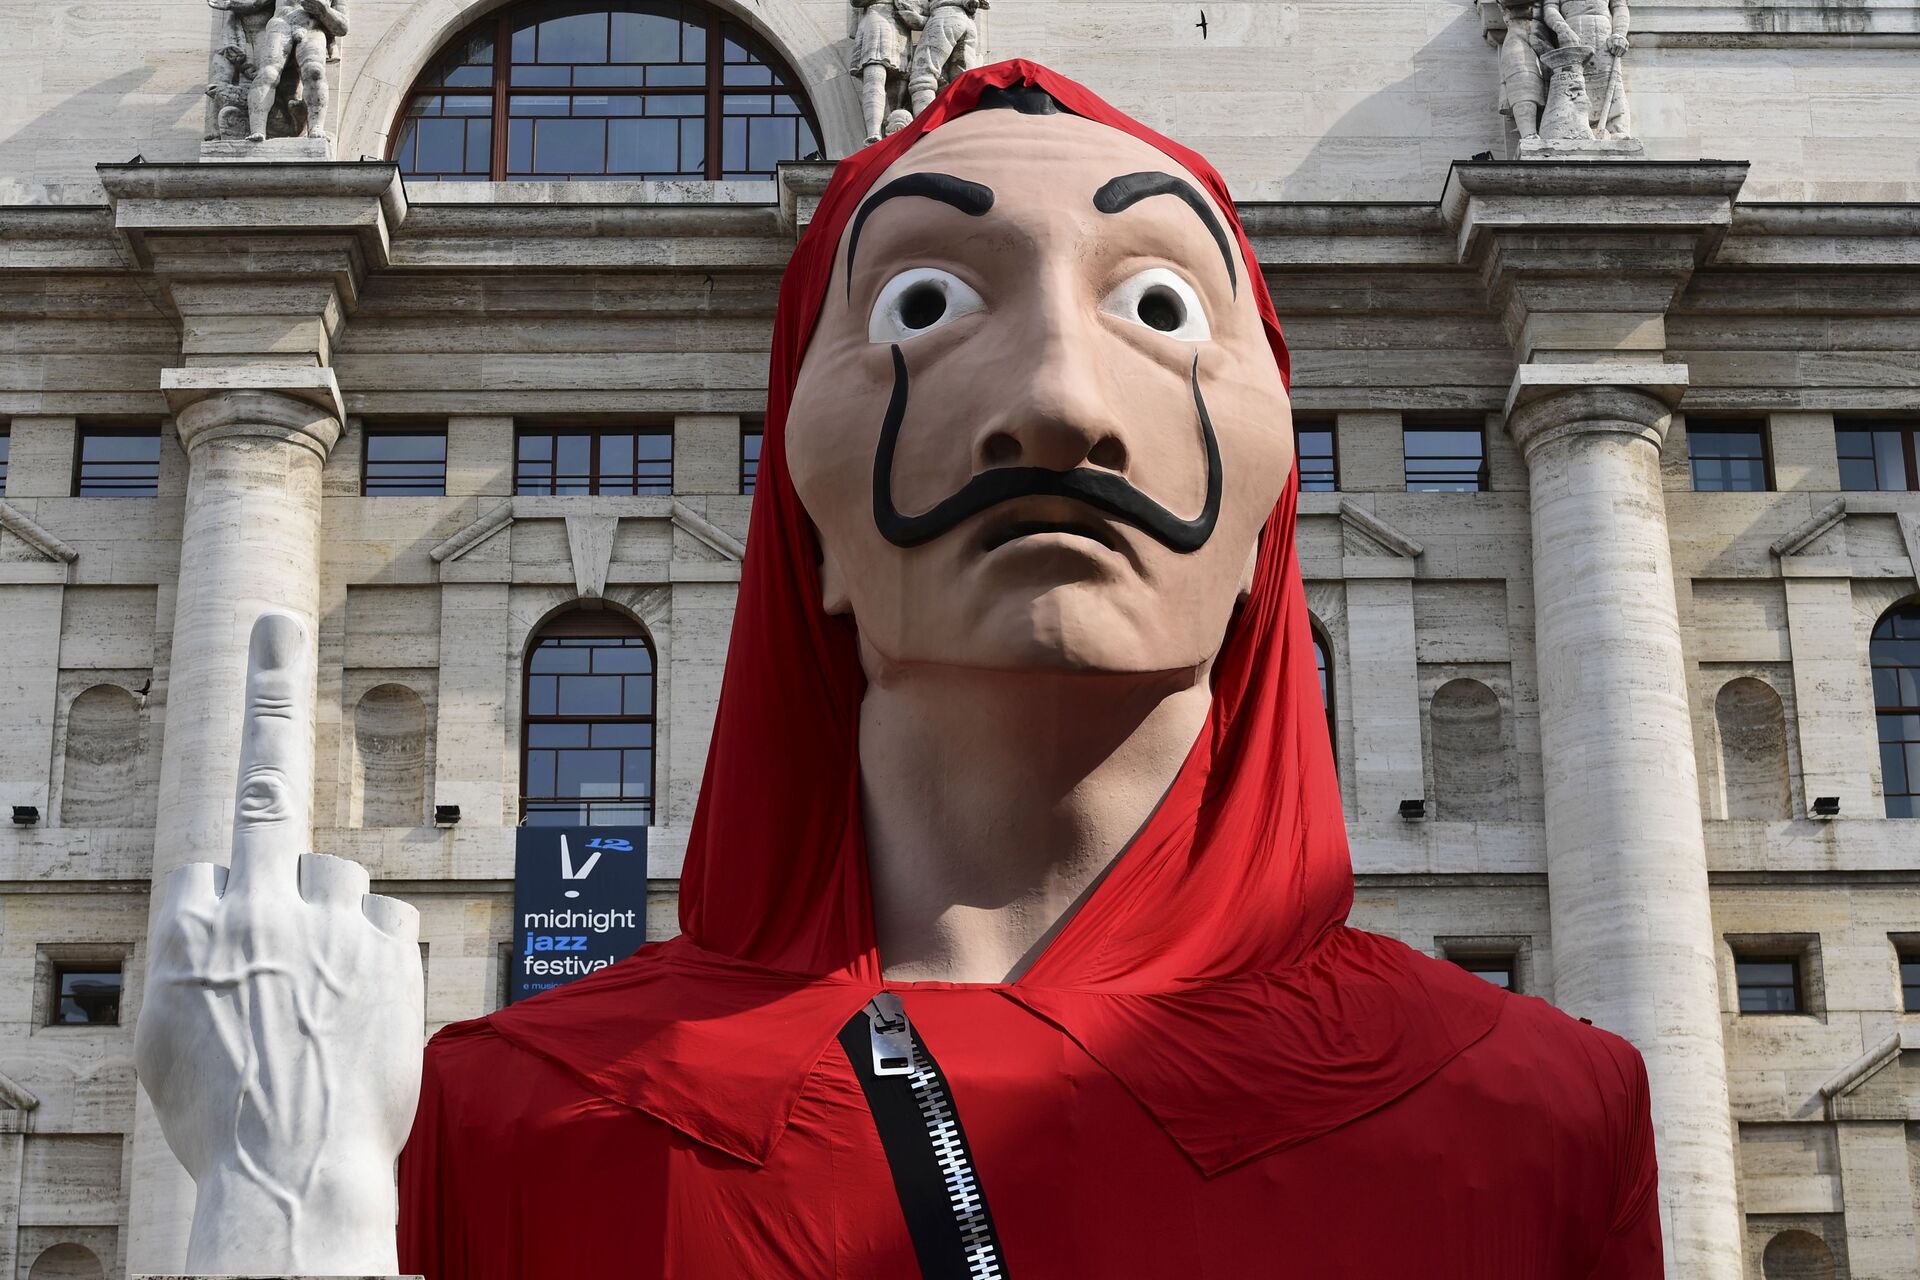 La máscara de Dalí popularizada por la serie 'La casa de papel' - Sputnik Mundo, 1920, 03.09.2021